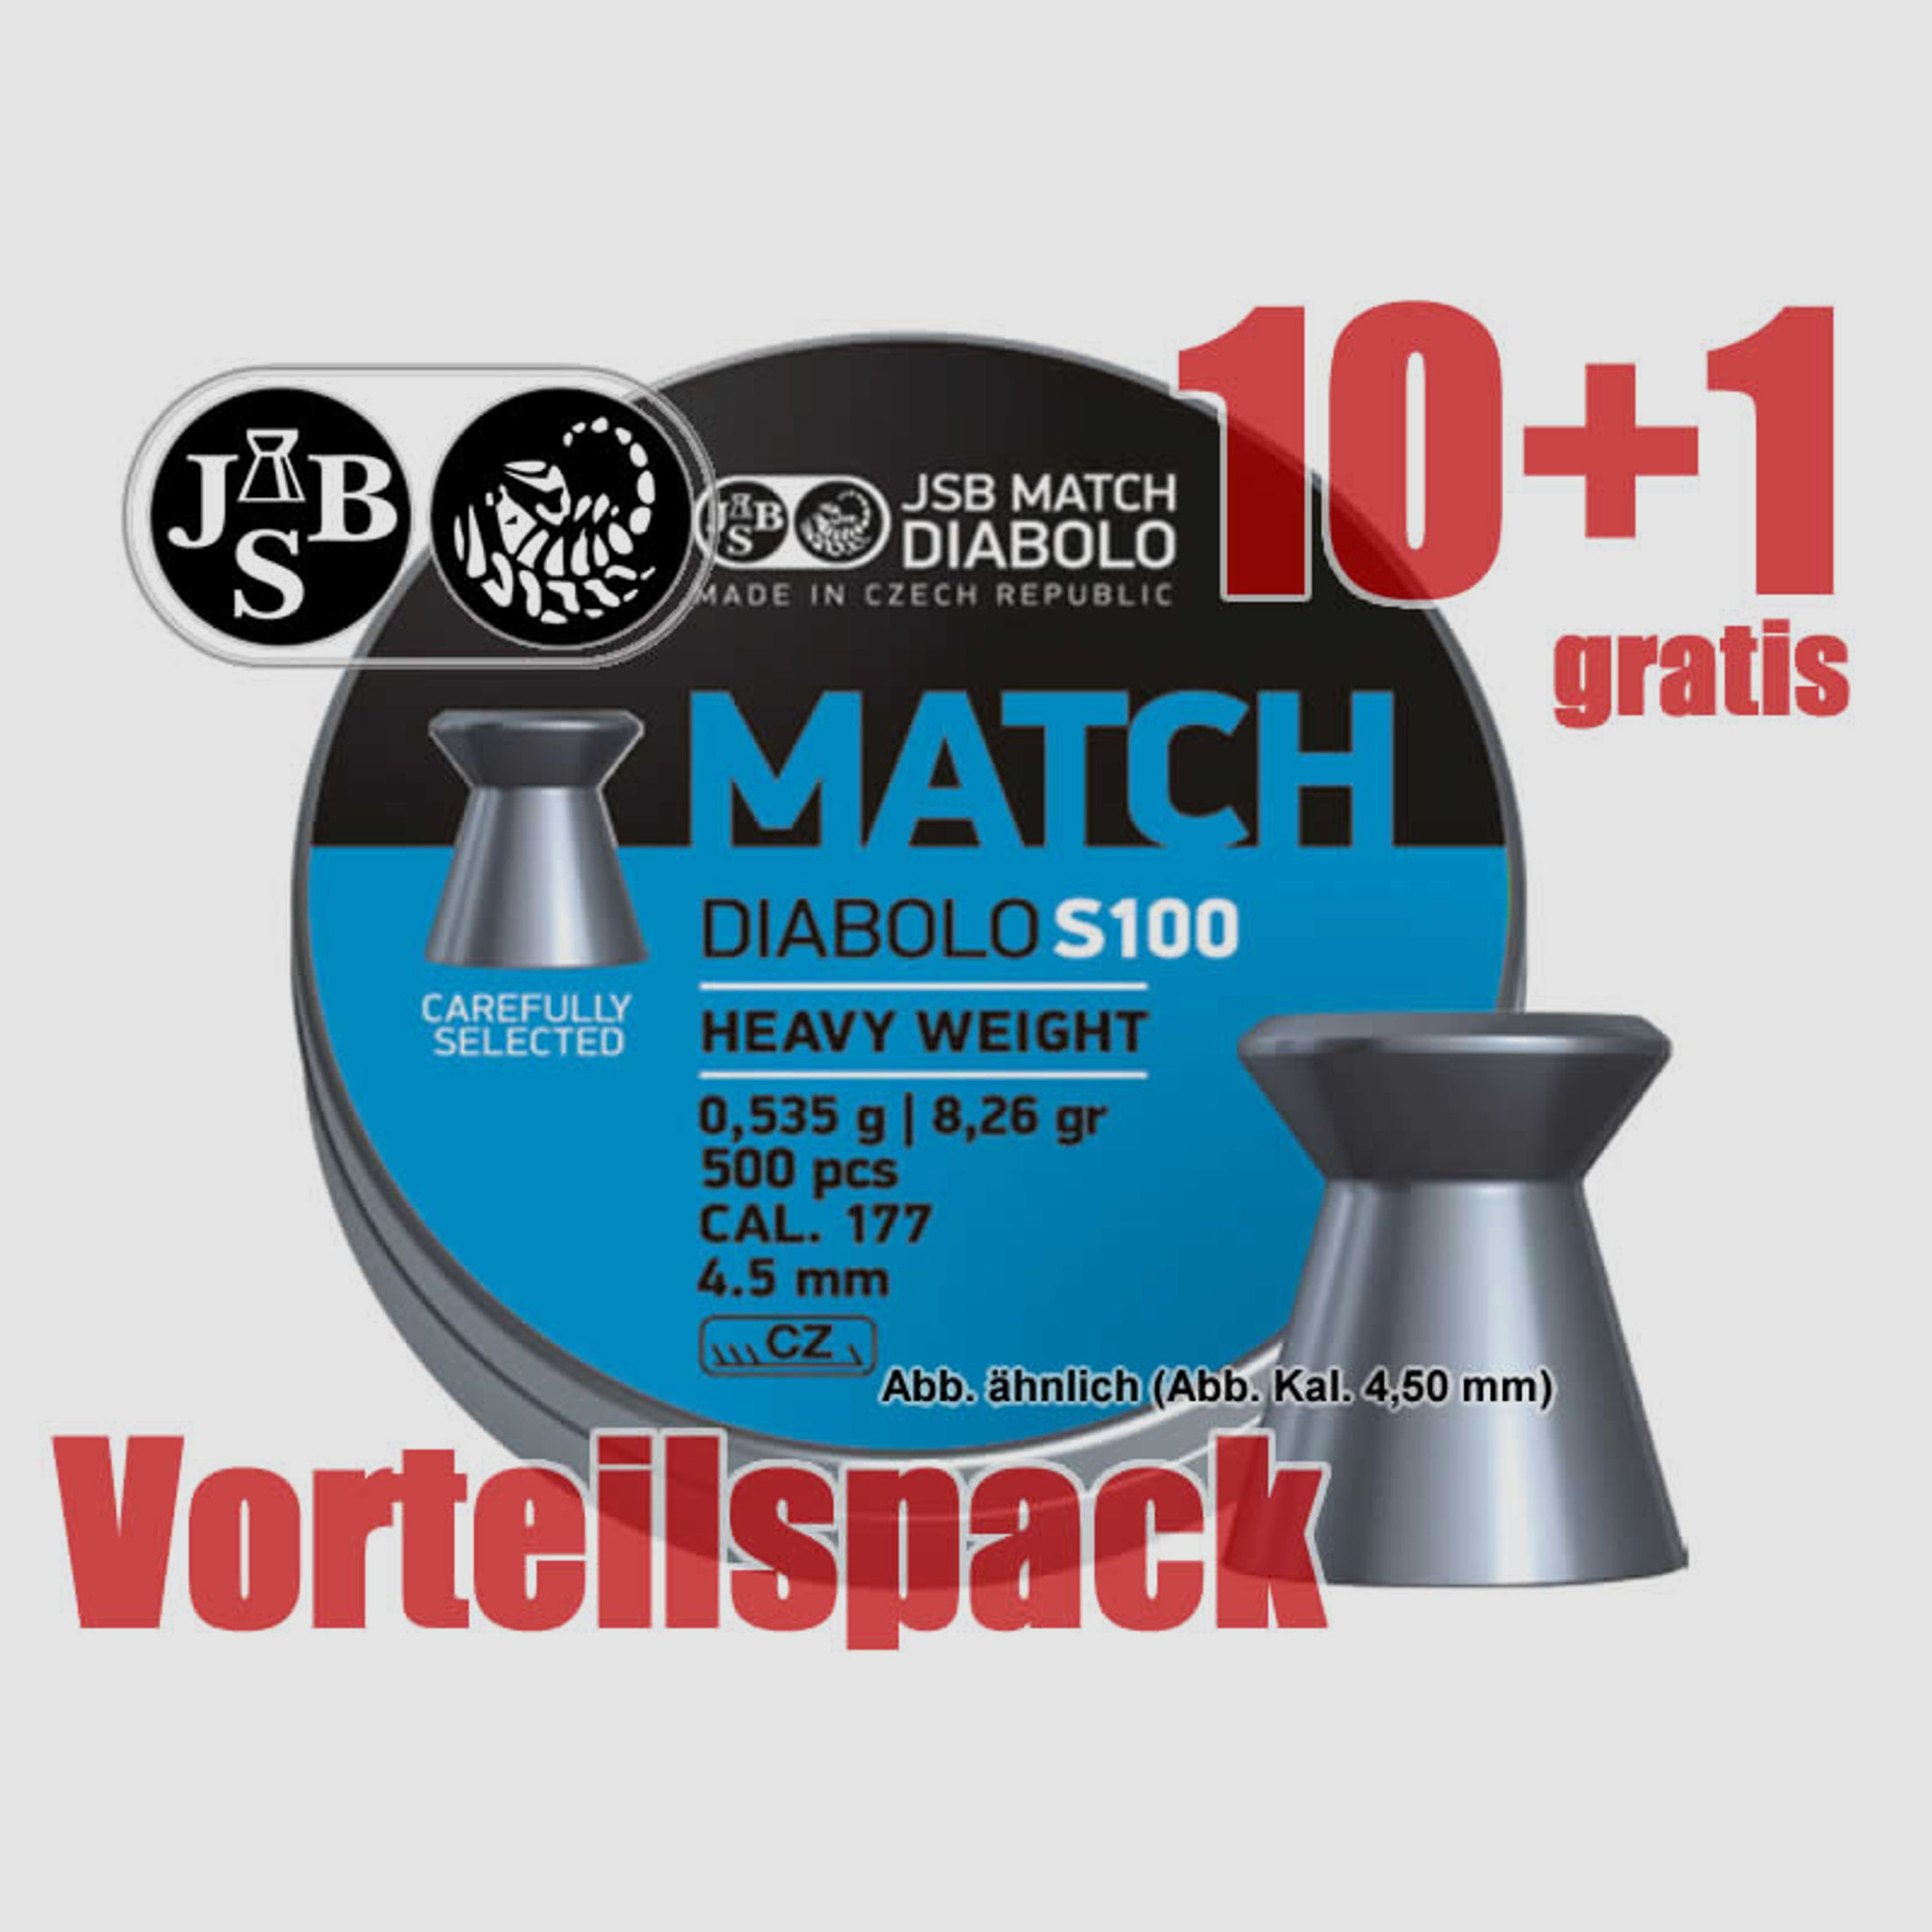 10+1 GRATIS x 500 St. Match-Diabolo JSB MATCH S100 HEAVY, Kal. 4,50 mm, 0,535 g